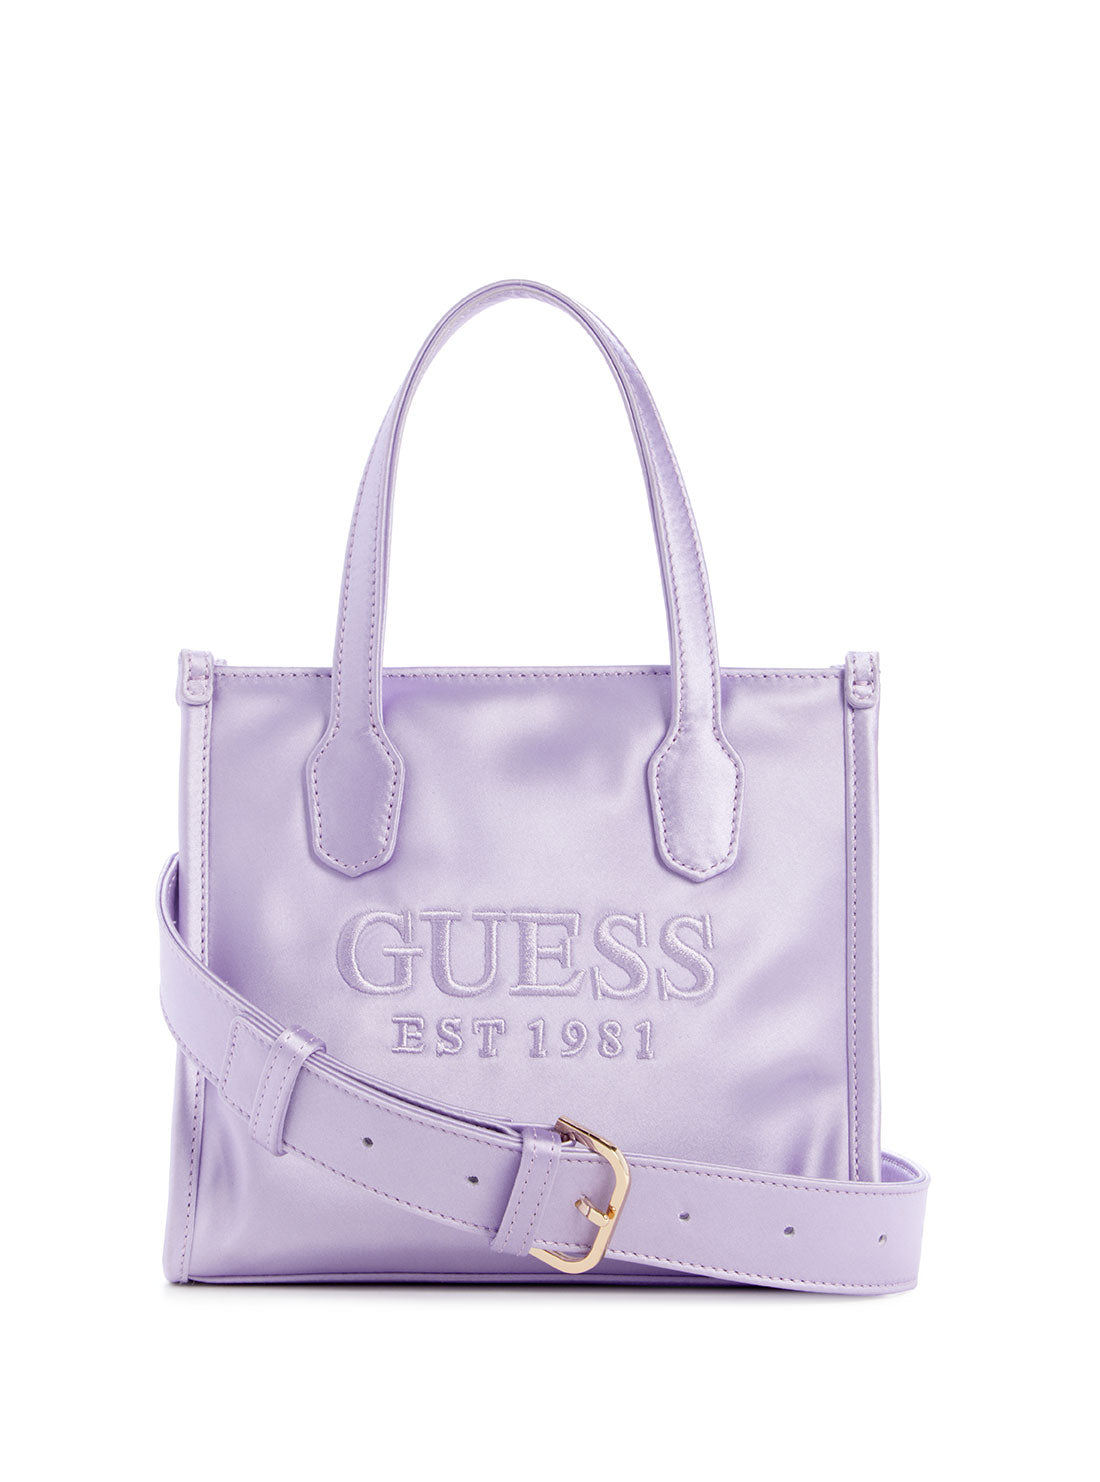 GUESS Purple Silvana Mini Tote Bag front view